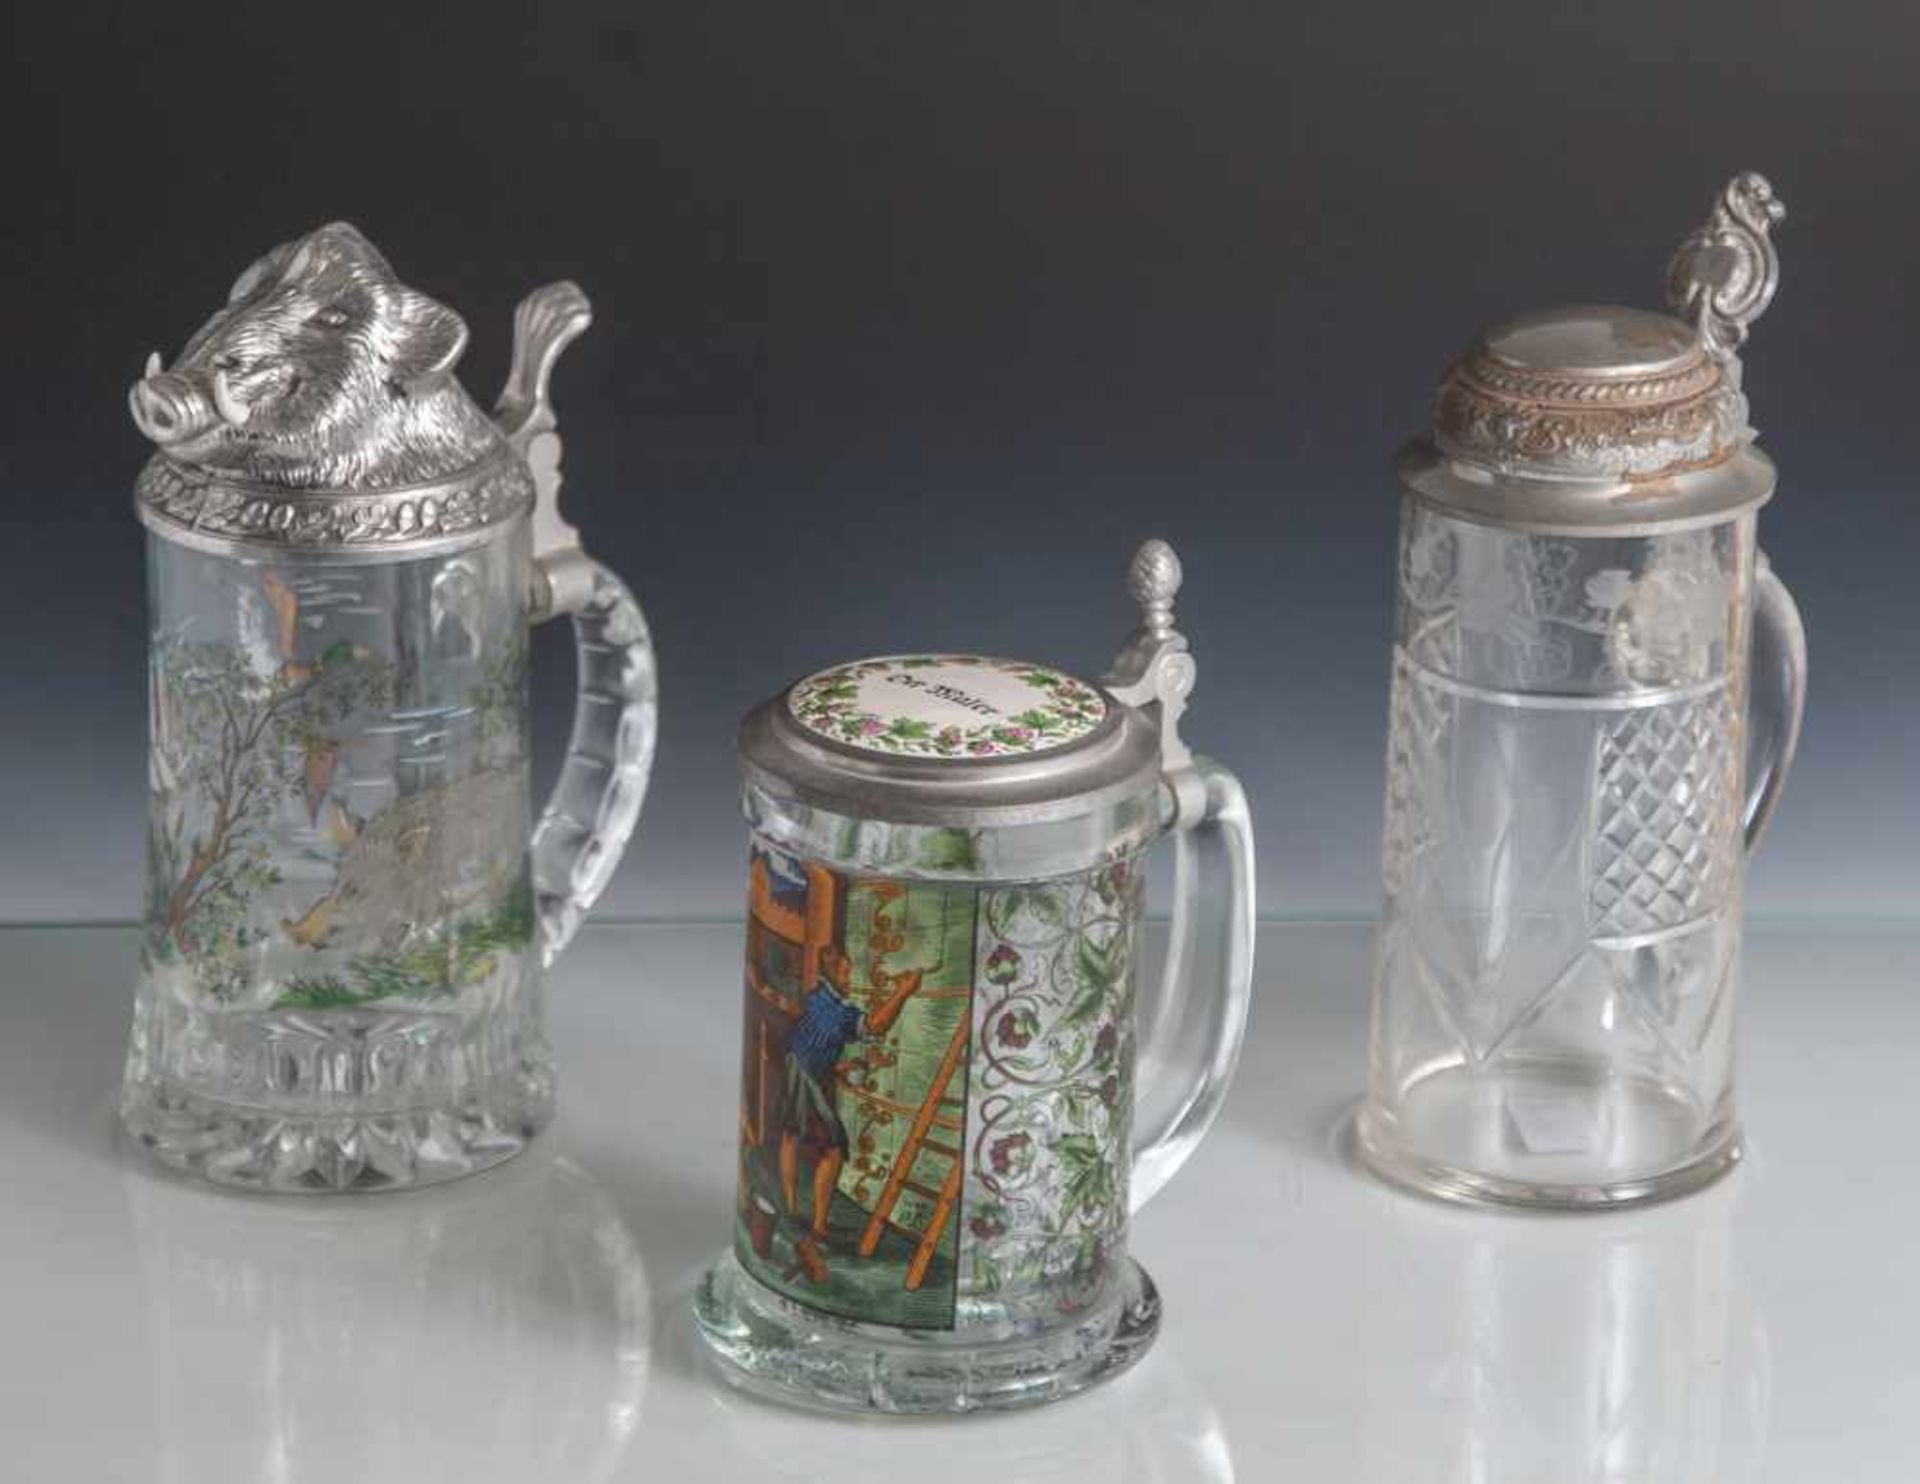 3 Deckelhumpen, 2 x neuzeitl., 1 x älter (um 1900), Pressglas mit transparentem Umdruckdekor, 1 x